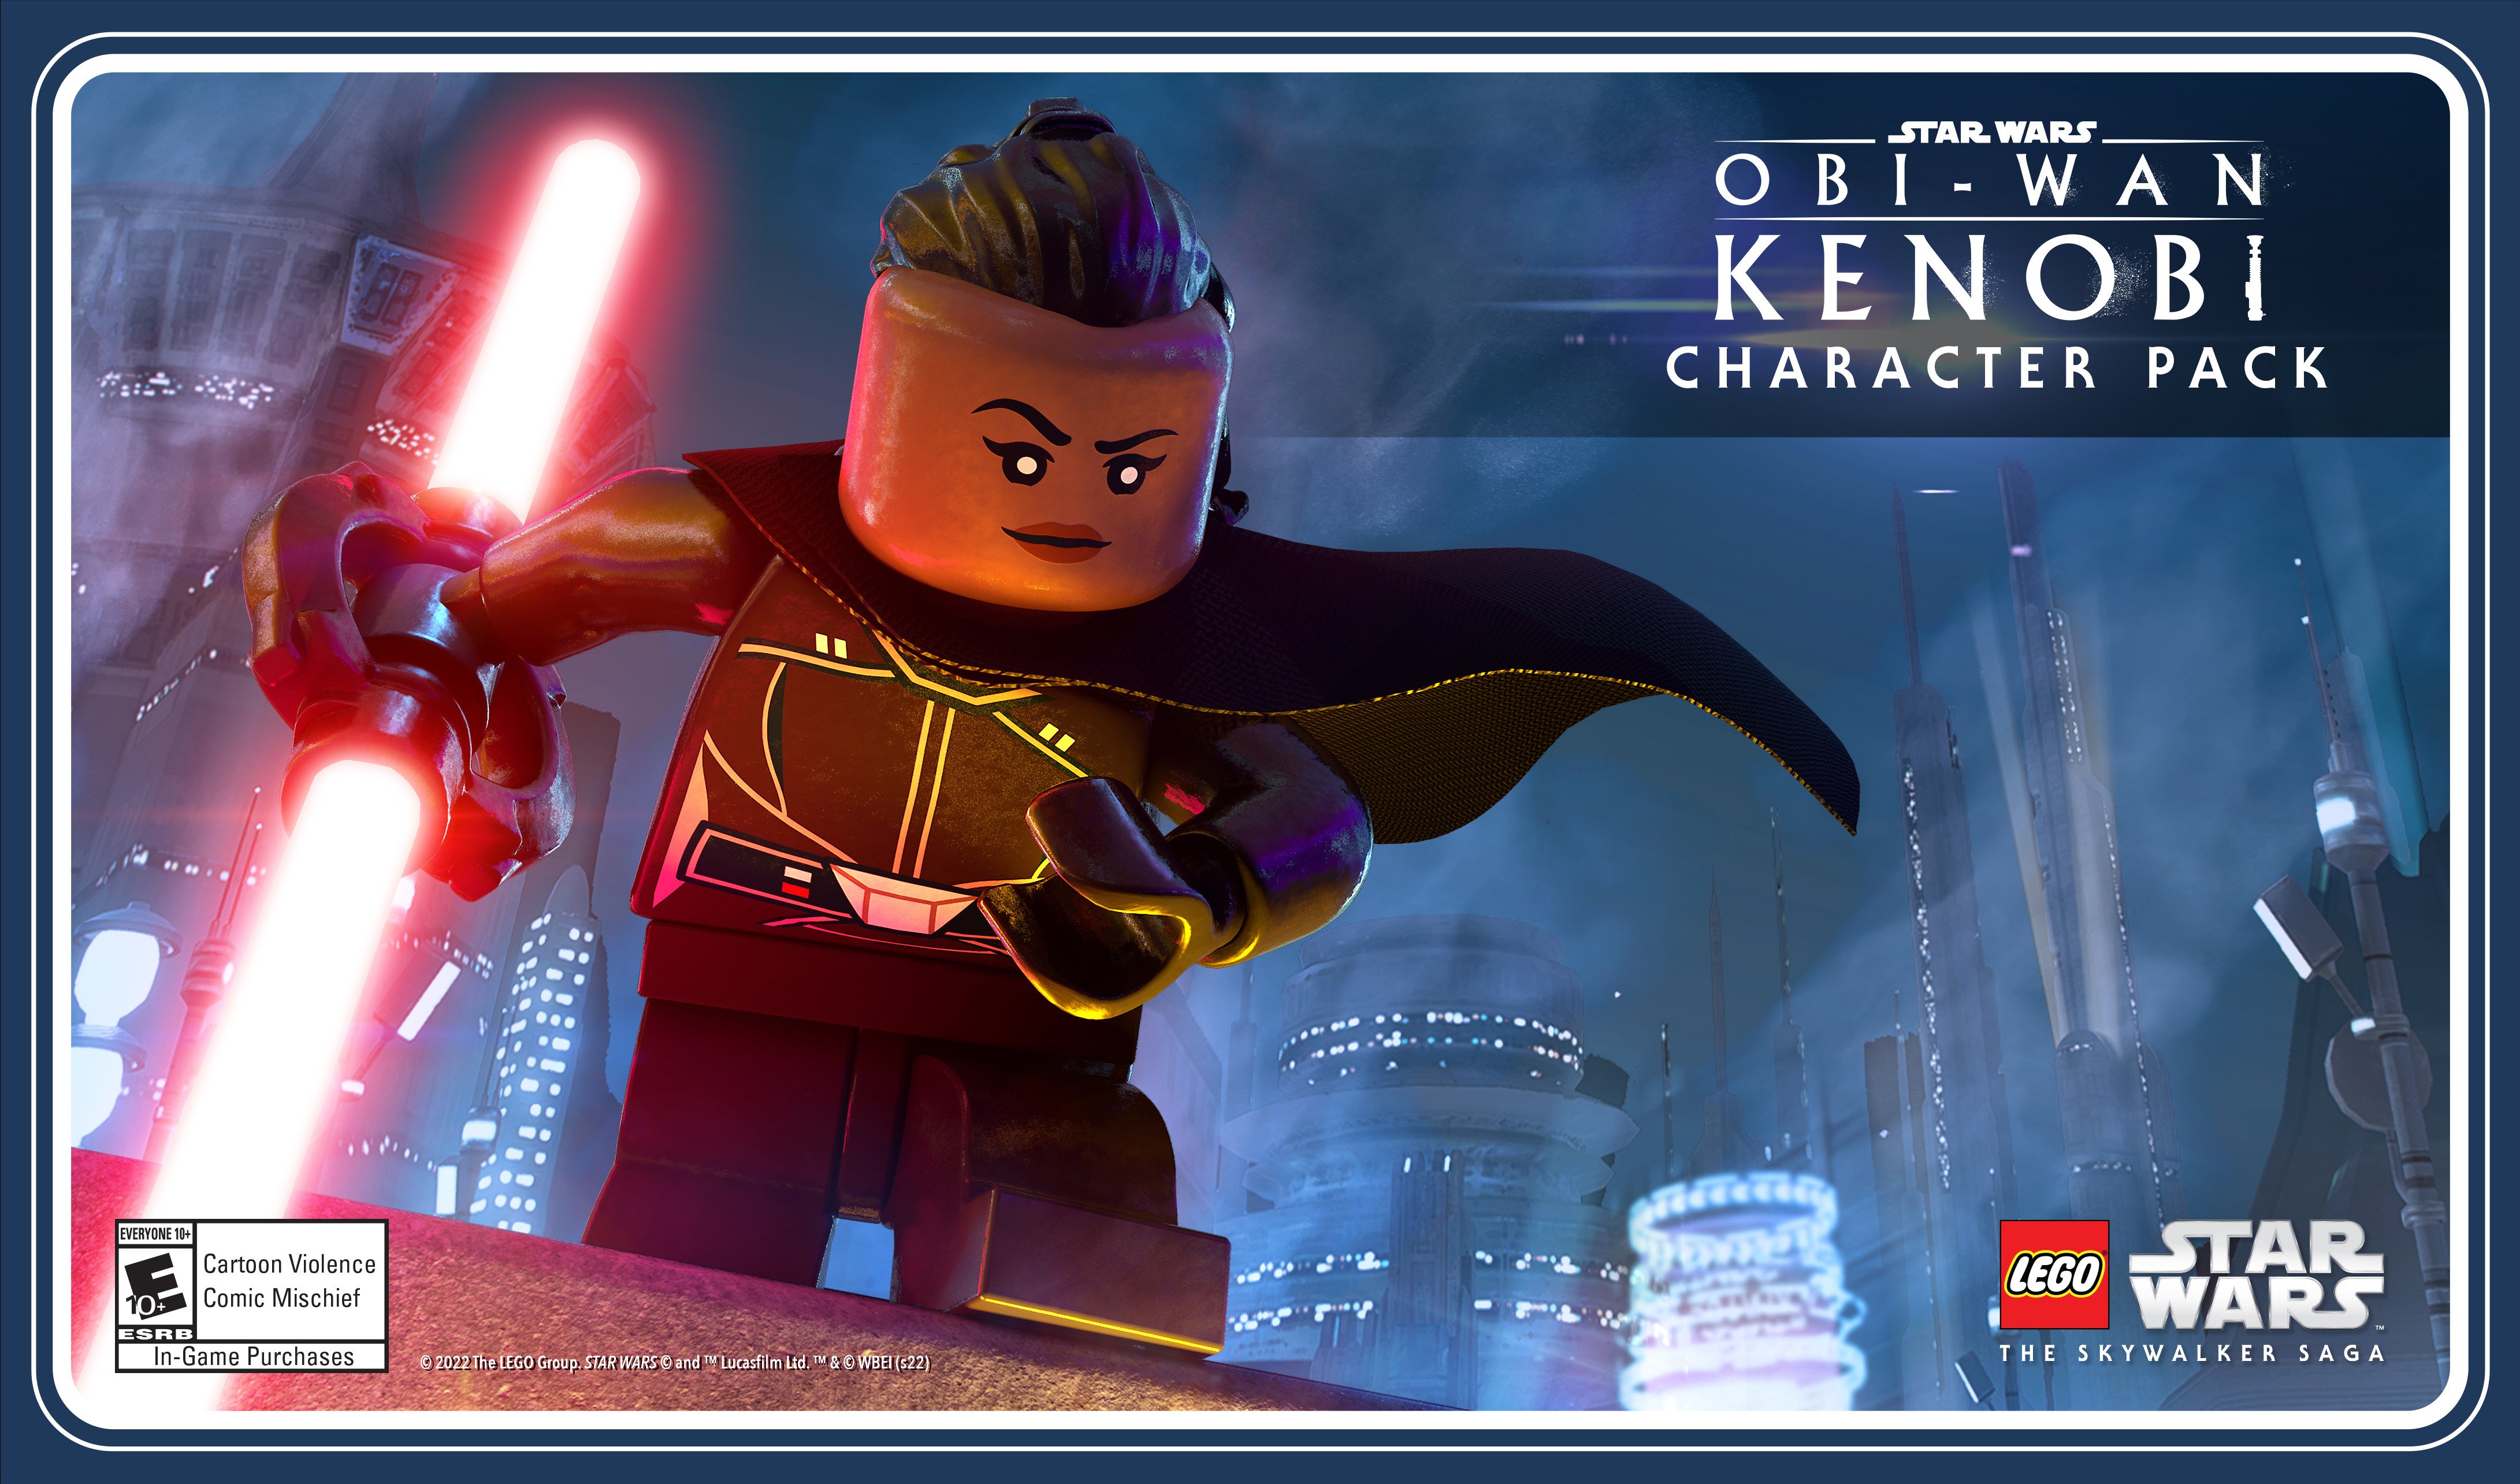  LEGO Star Wars: The Skywalker Saga Update